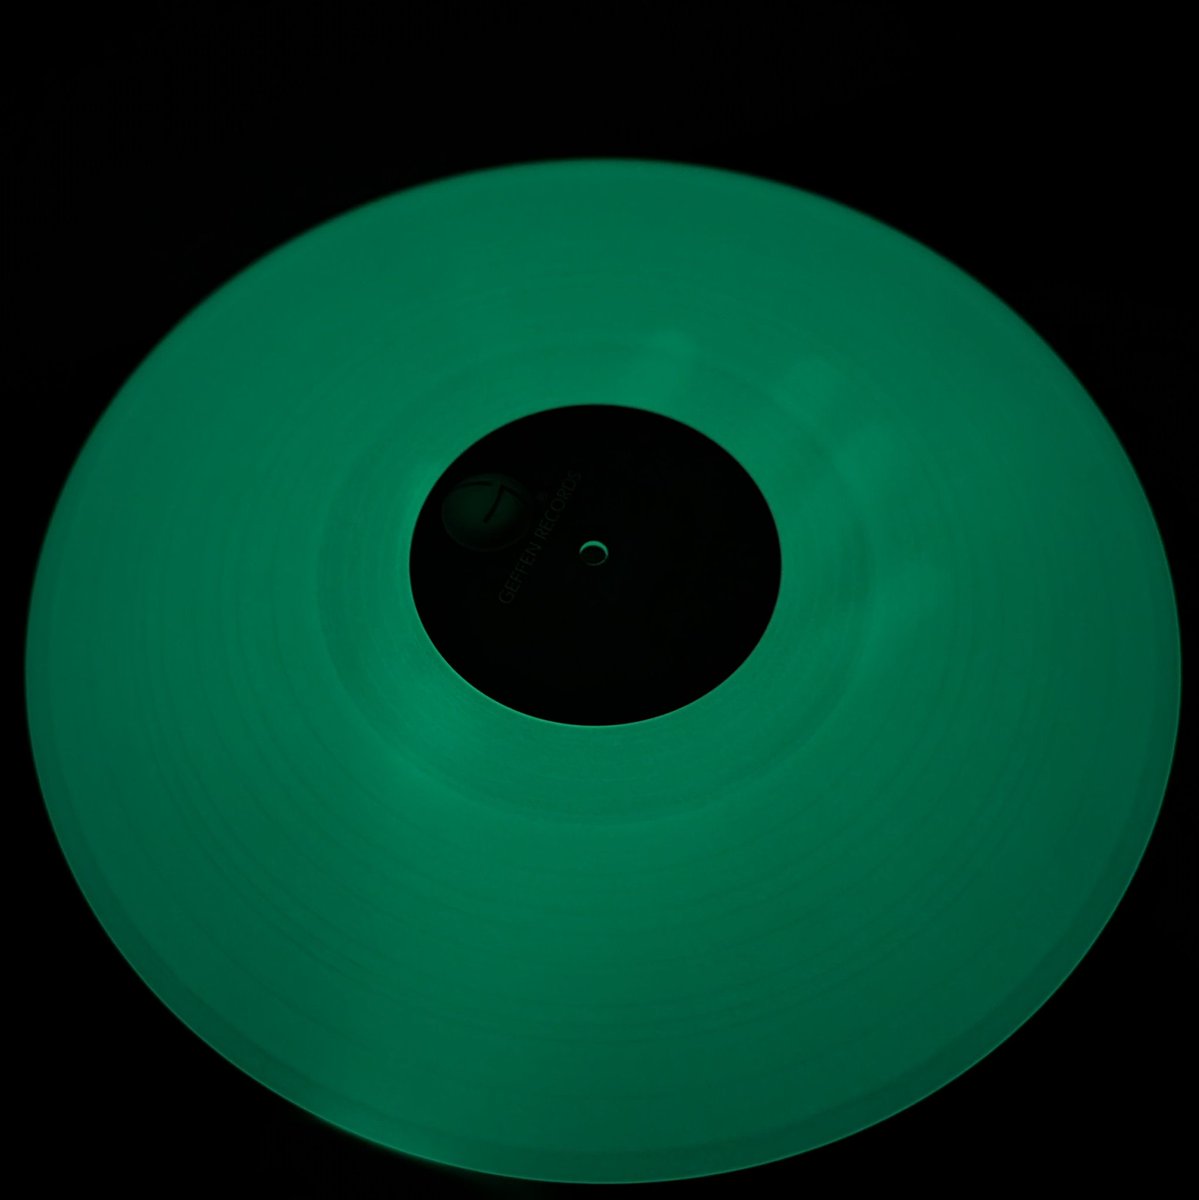 #35 Beetlejuice Original Motion Picture Soundtrack on Vinyl #MichaelKeaton #WinonaRyder #TimBurton #DannyElfman